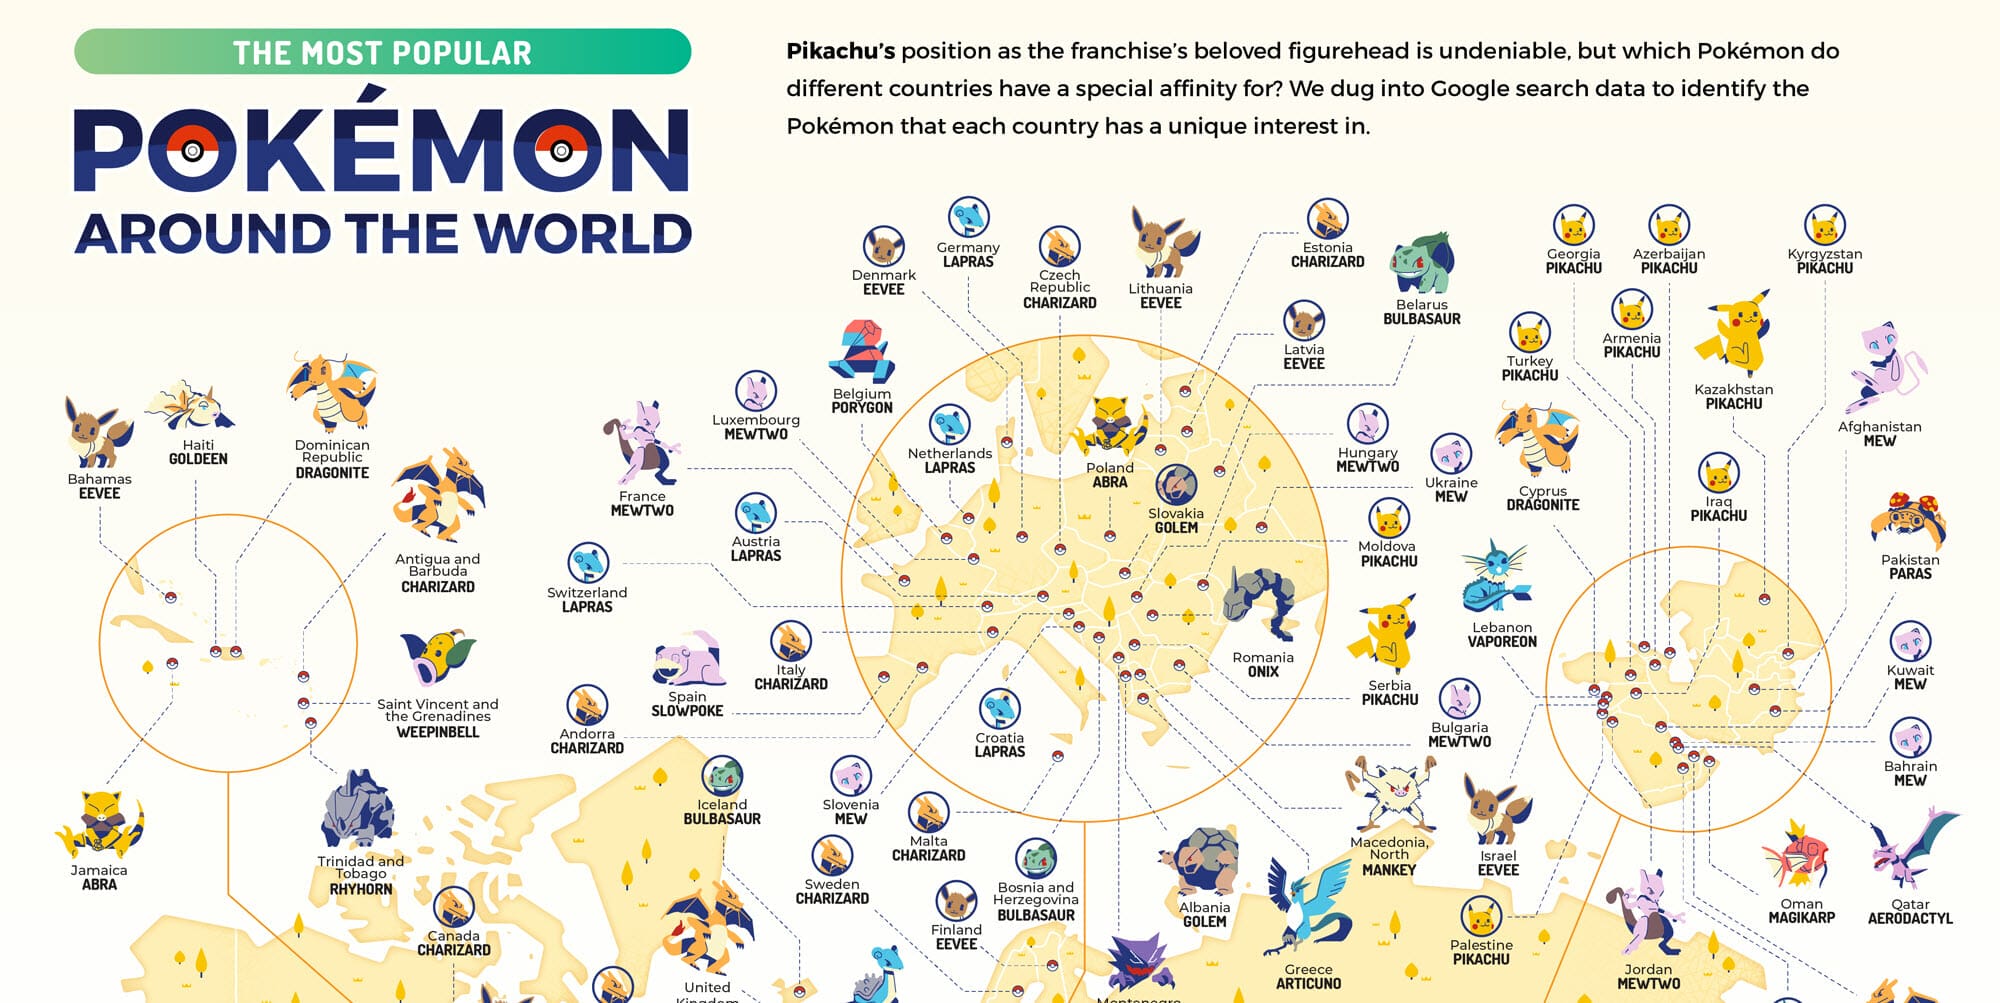 It's not always Pikachu The most popular Pokemon around the world